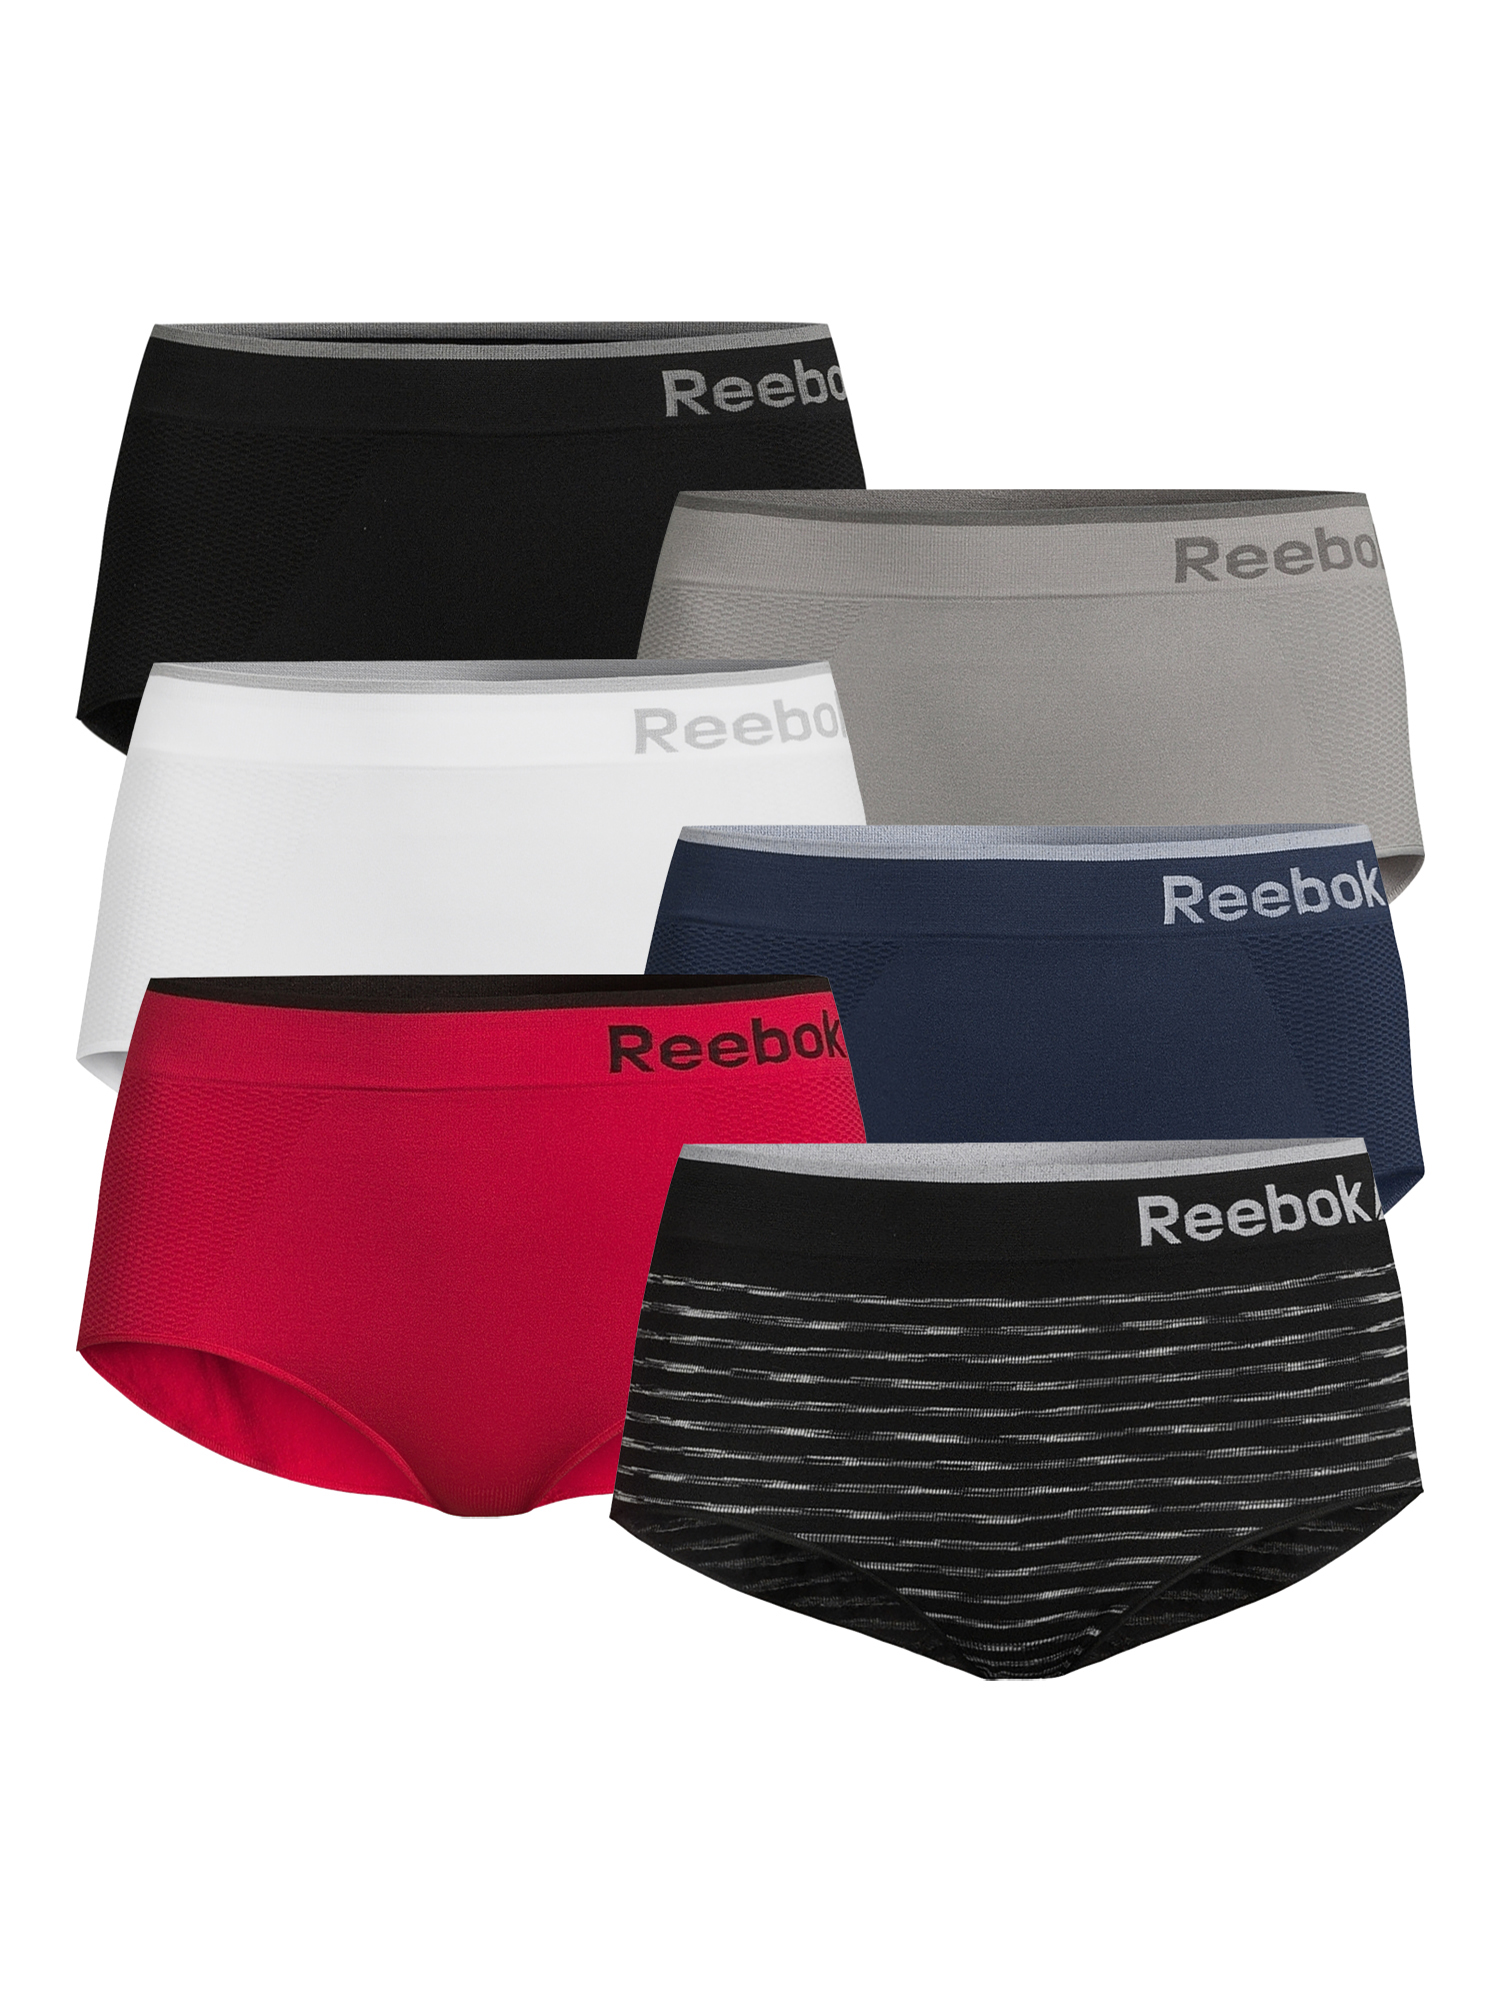 Reebok Women's Seamless Briefs,6-Pack, Sizes XS- 3XL - image 1 of 12